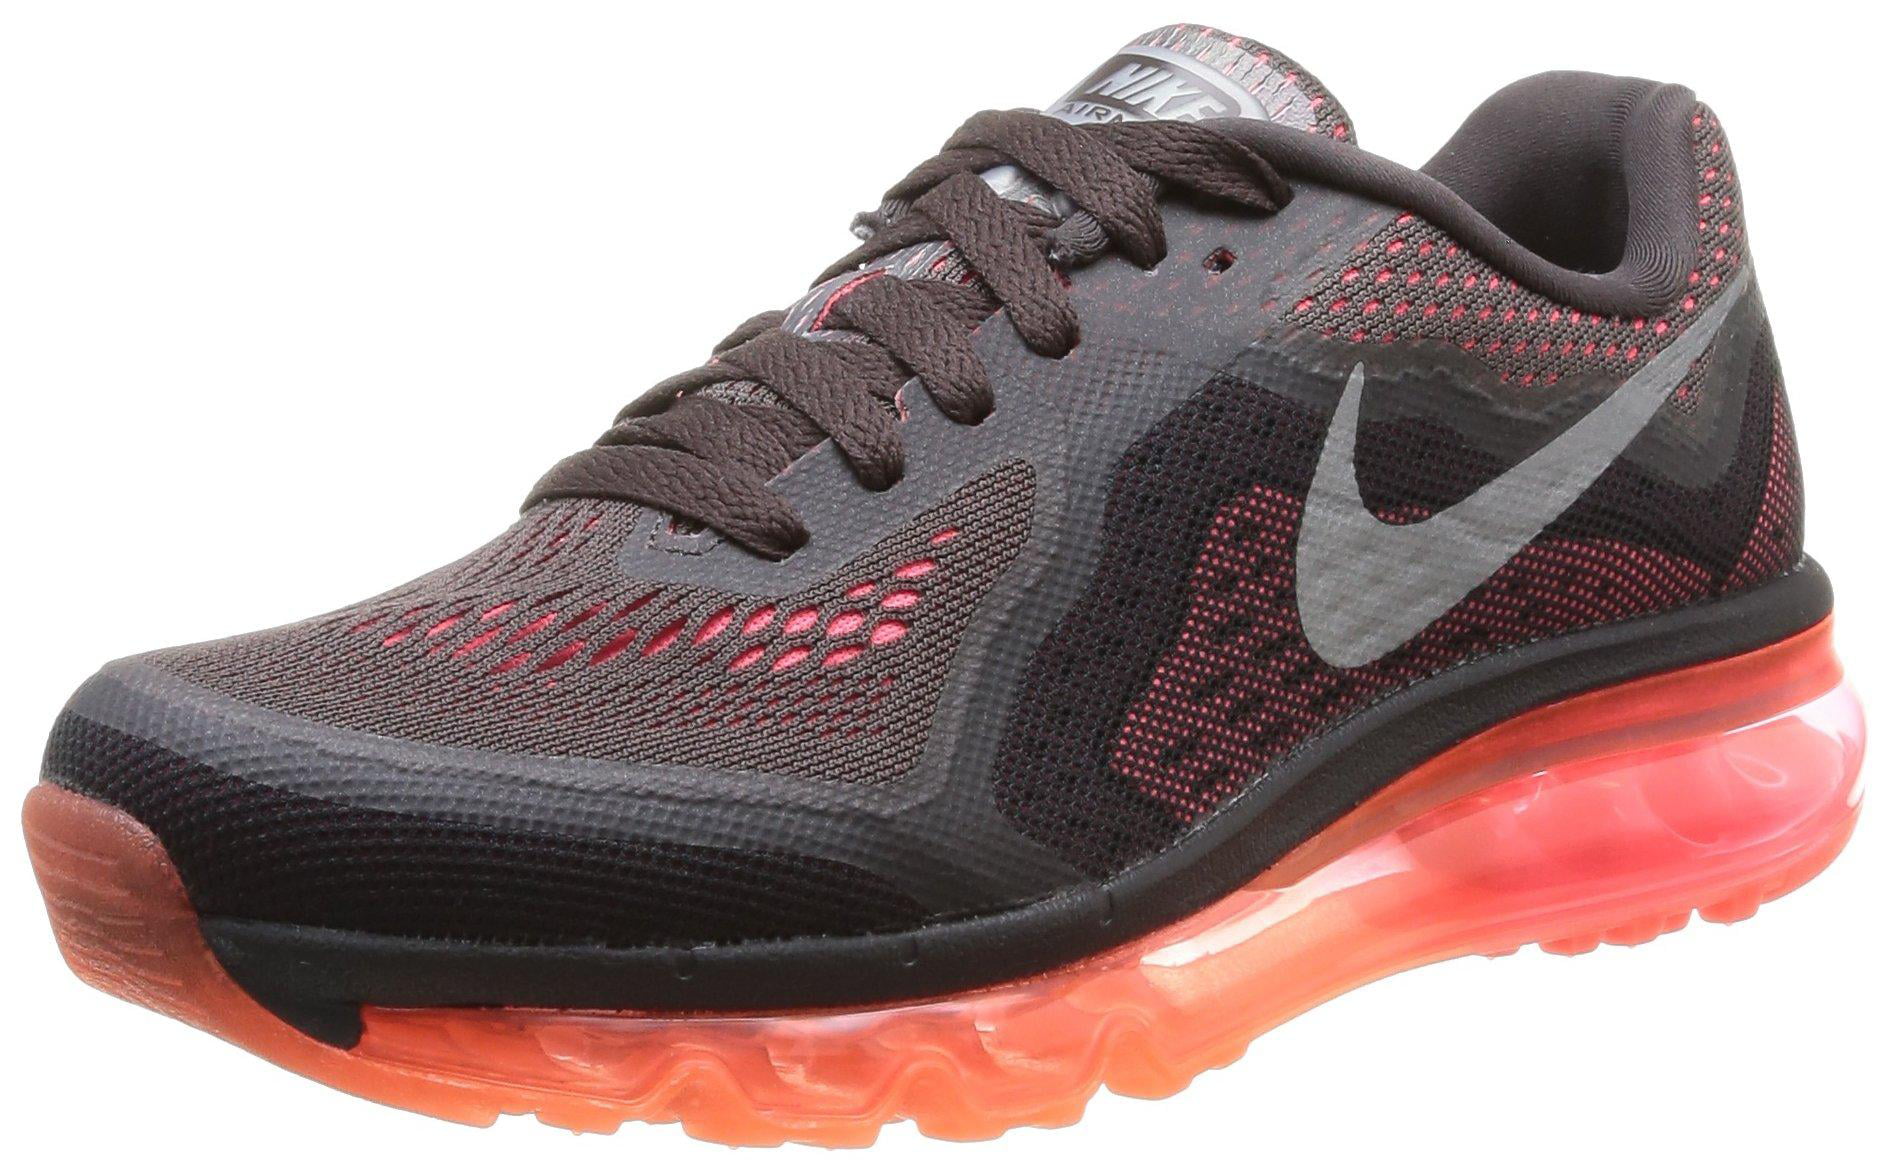 Larry Belmont polvo mensaje Nike Air Max + 2014 Running Women's Shoes - Walmart.com